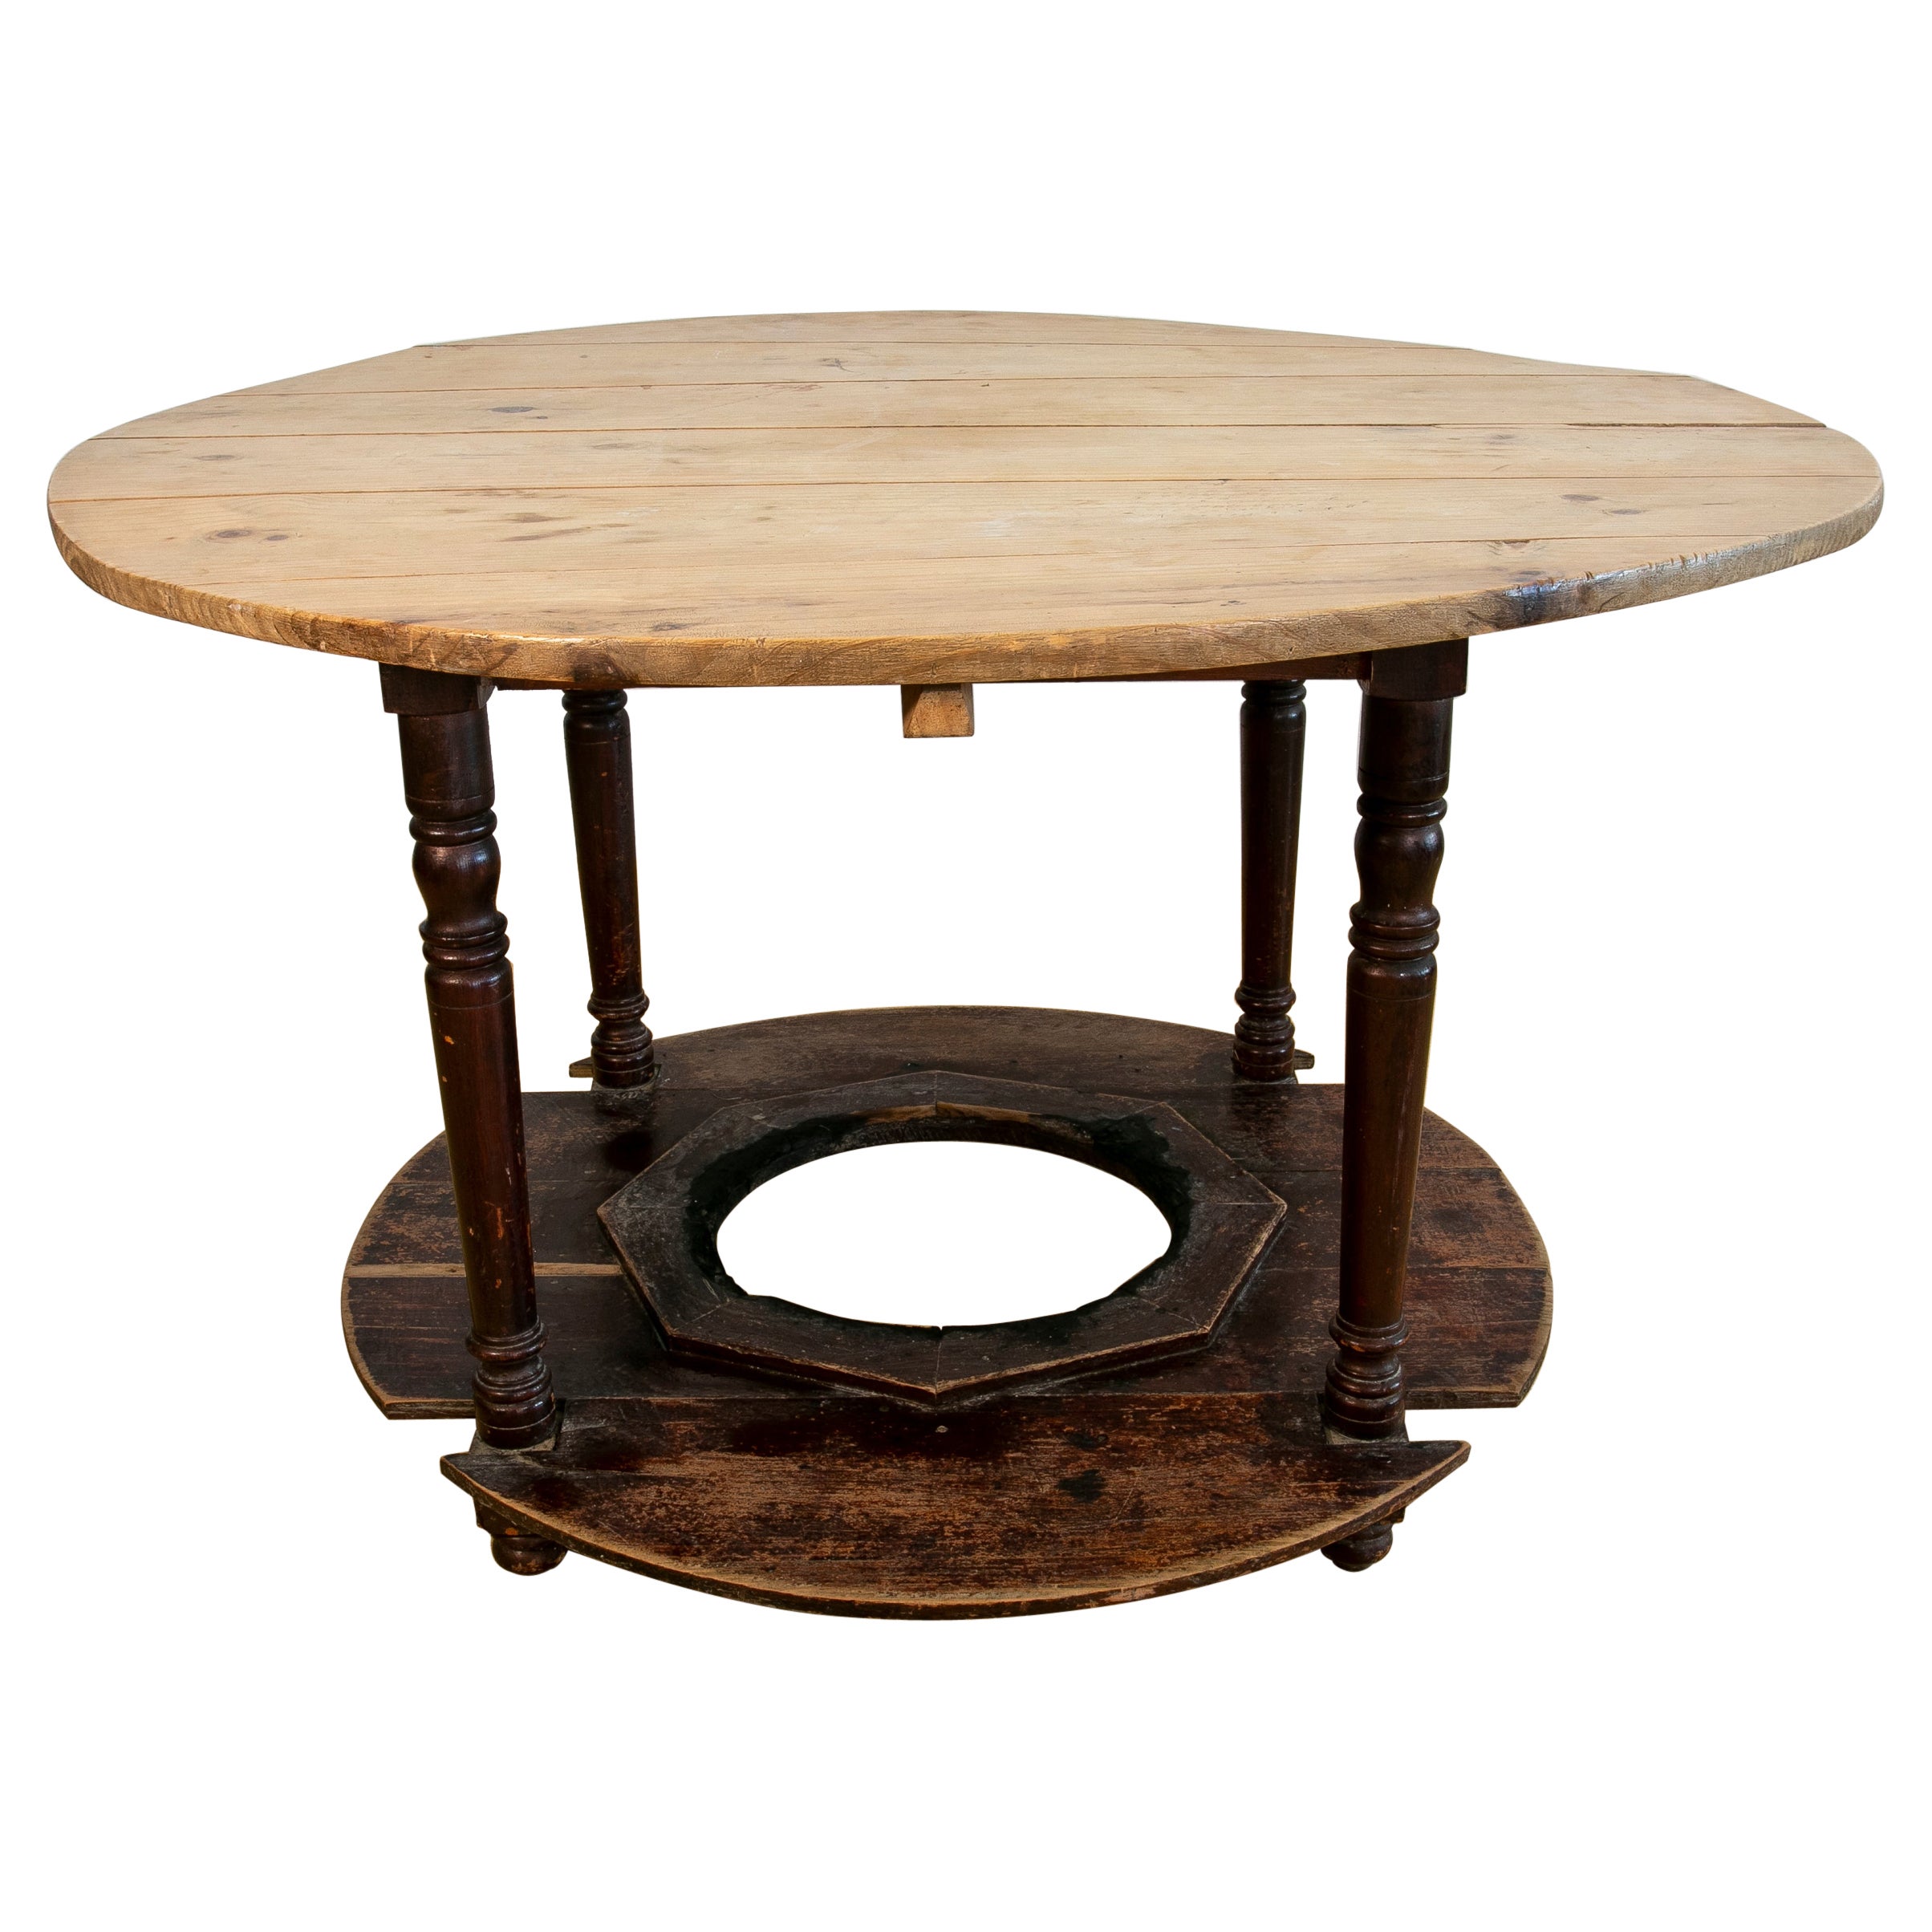 Table ronde typique espagnole en bois pour brasero de table en vente